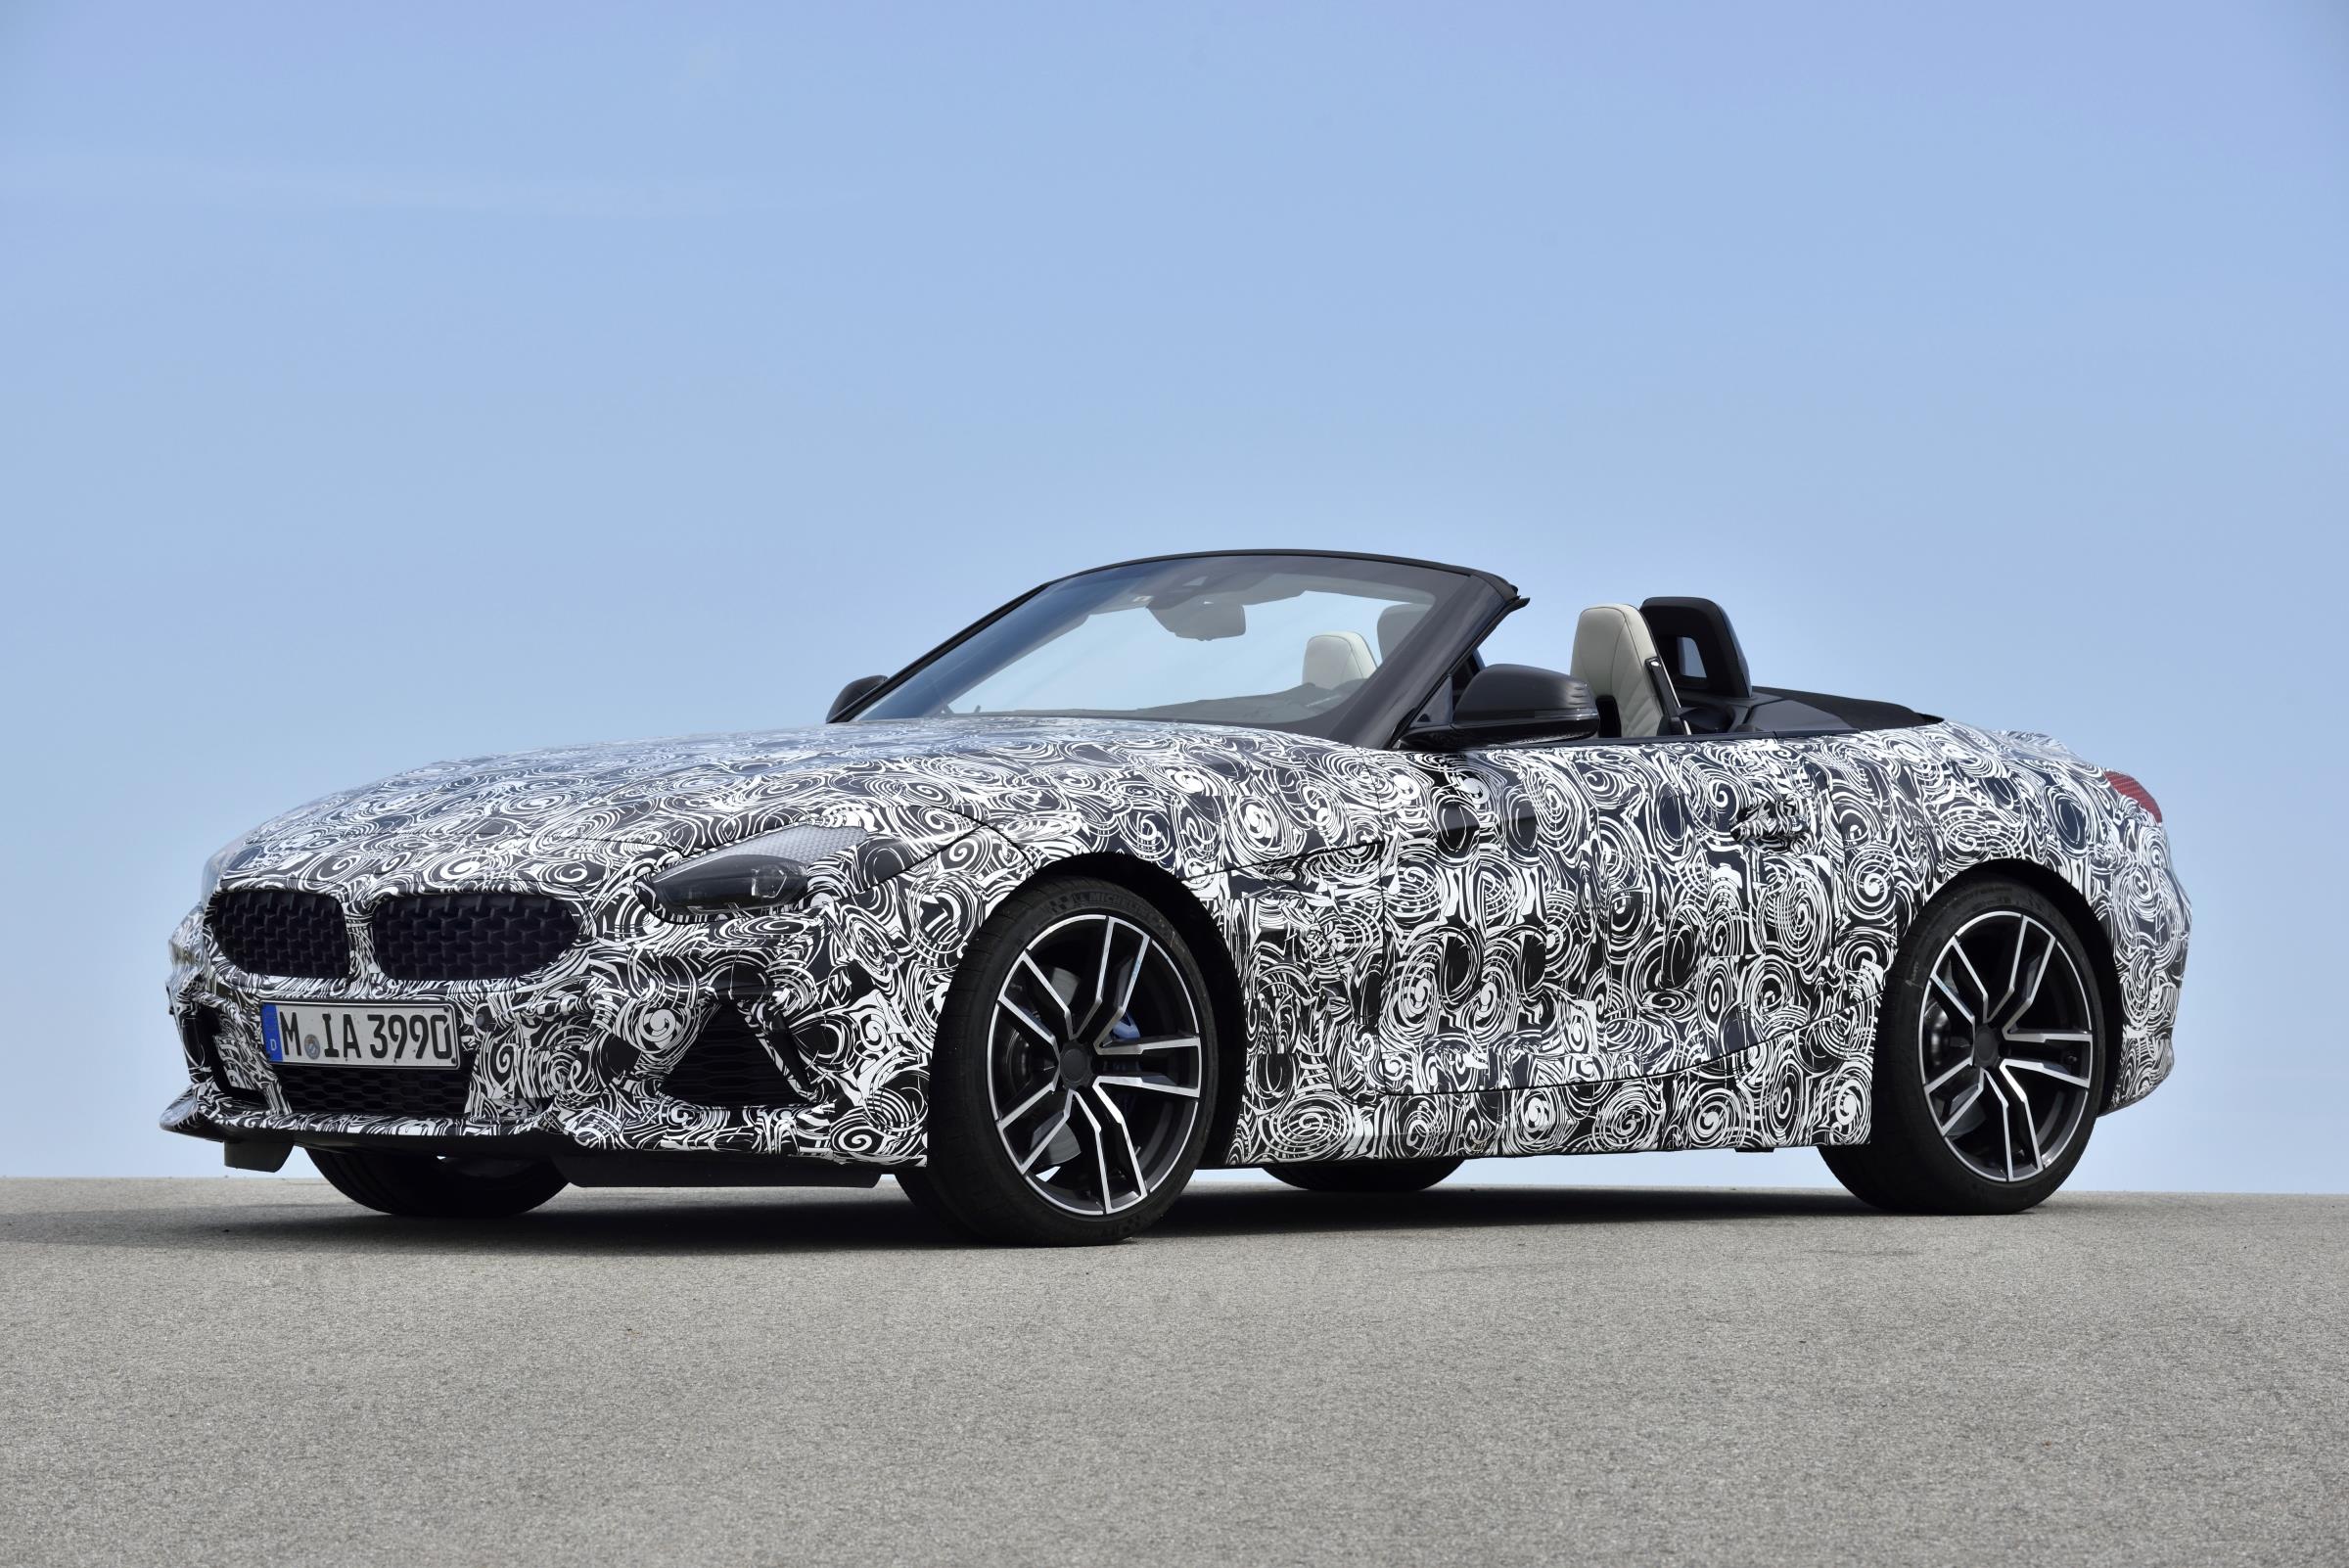 BMW Z4 M40i confirmed, development almost finalised